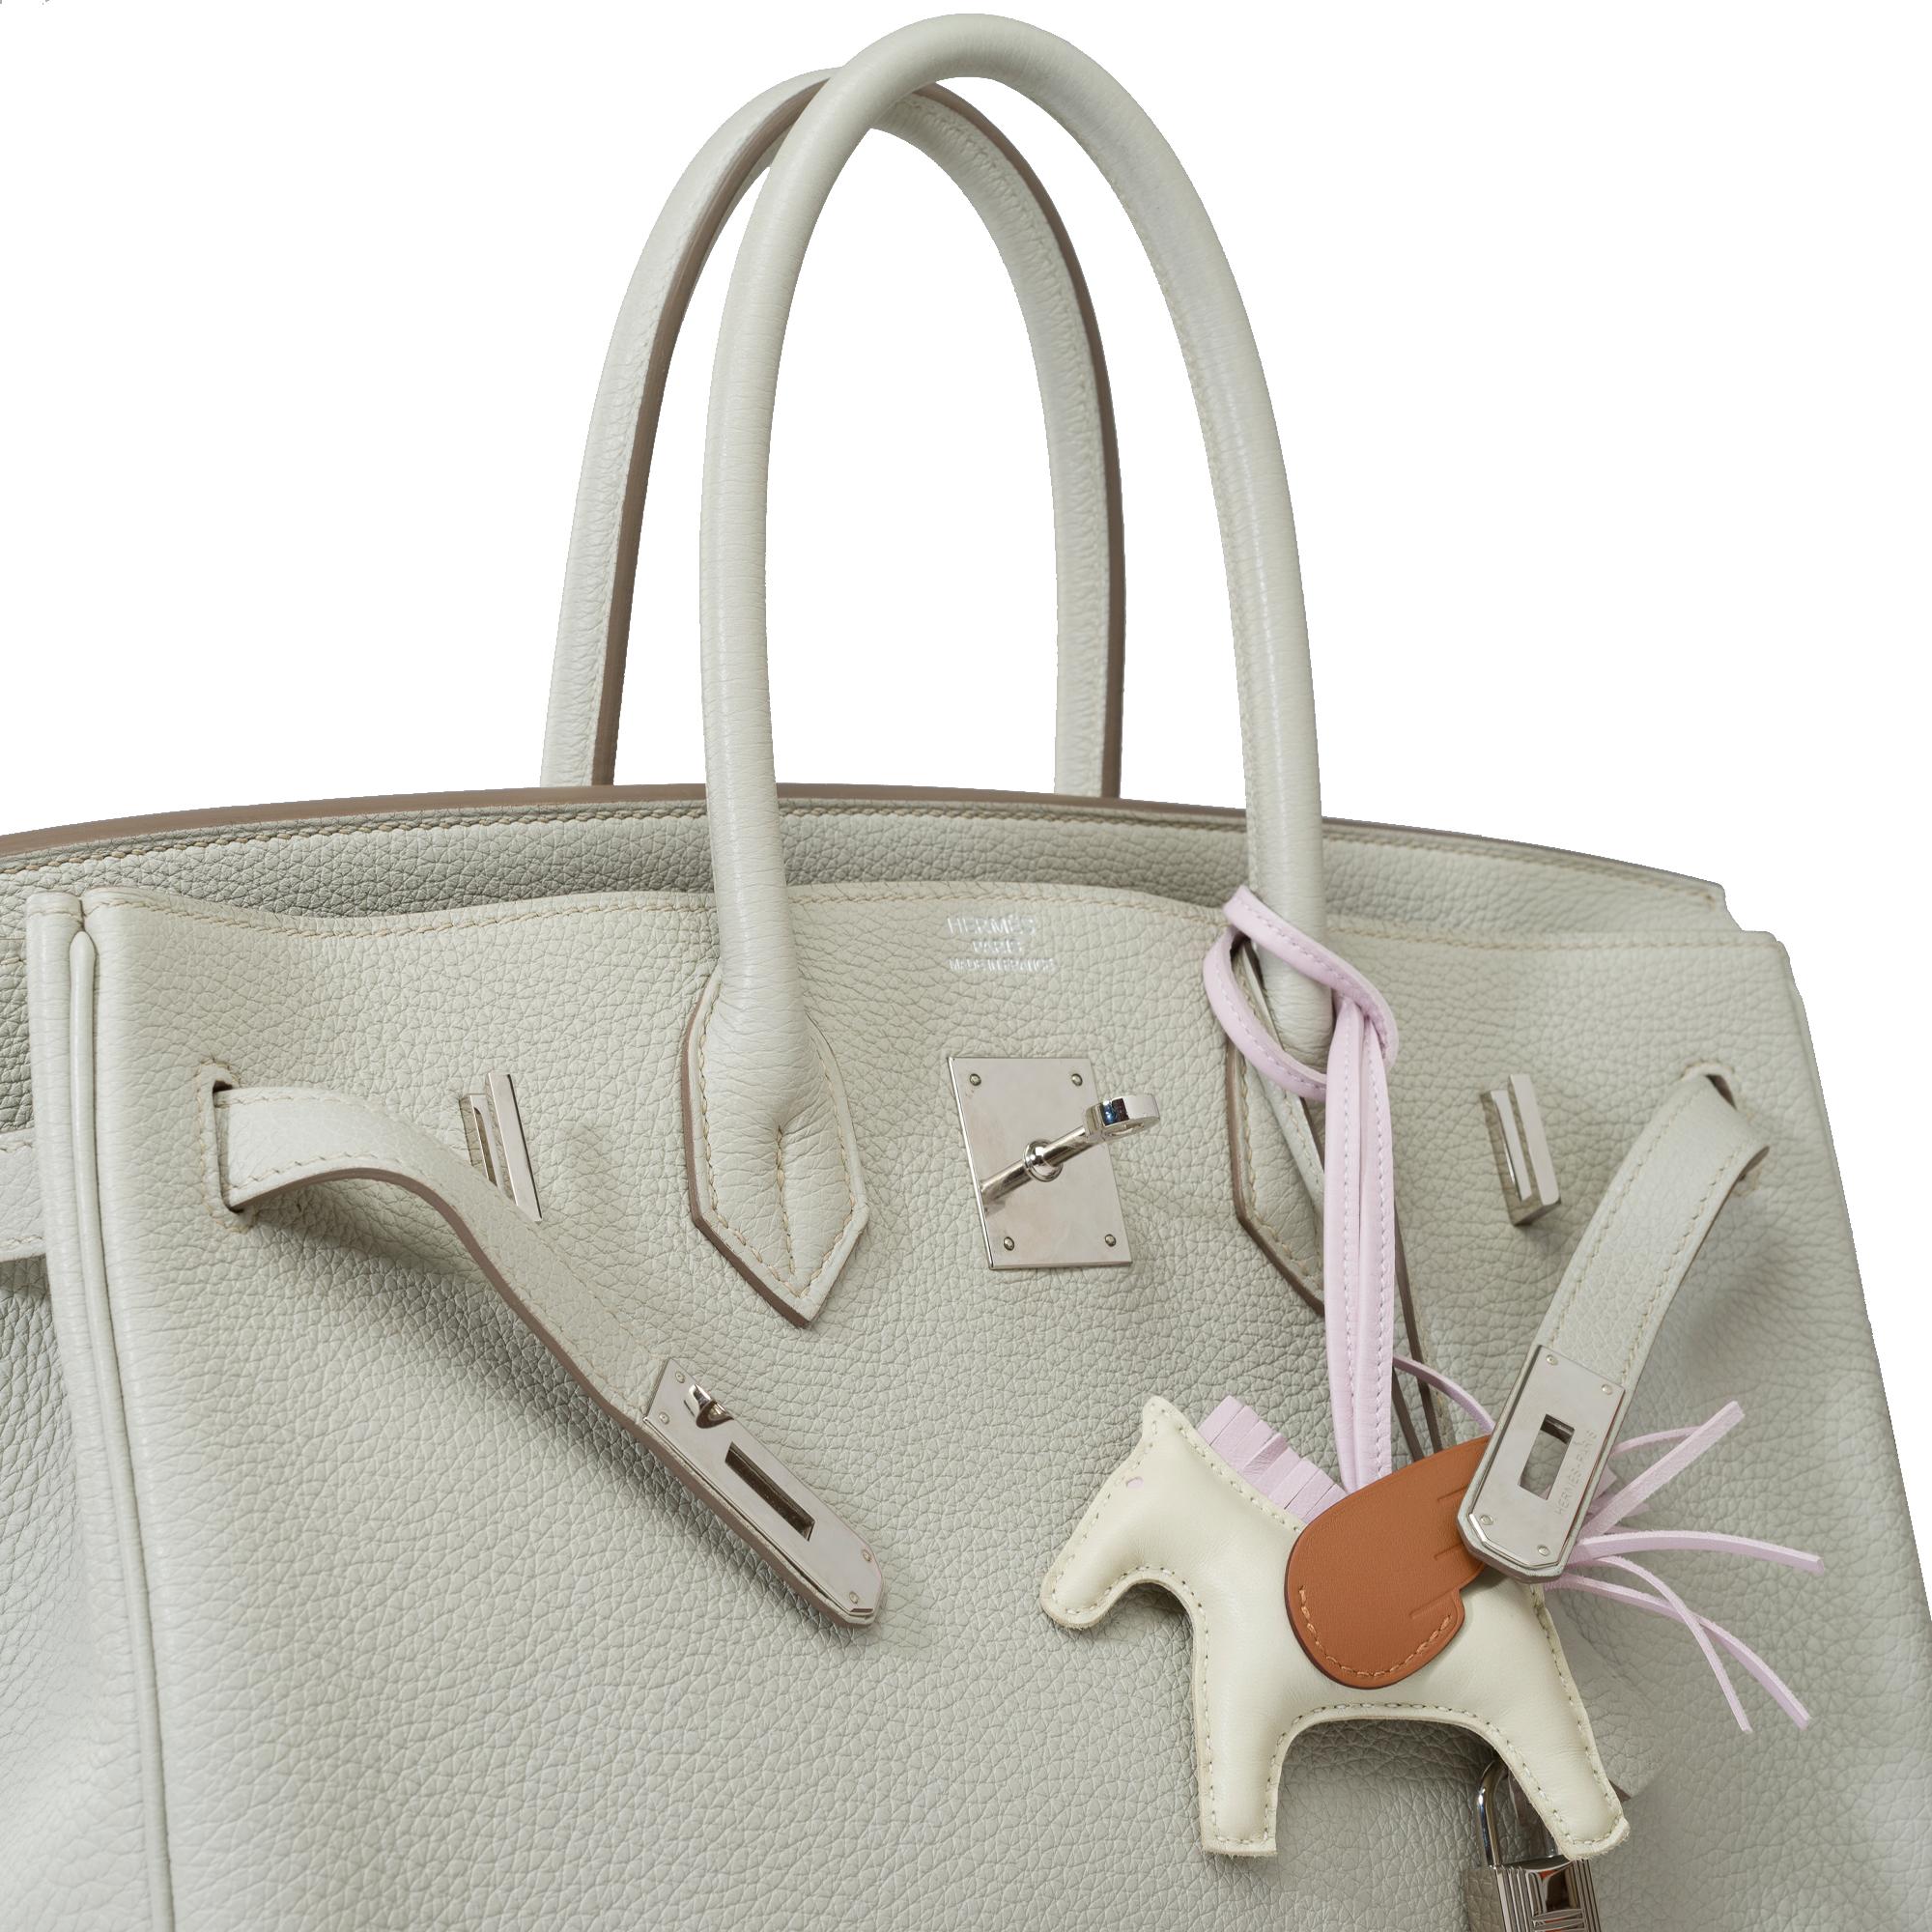 Amazing Hermès Birkin 35 handbag in Gris Perle Togo Calf leather, SHW For Sale 5